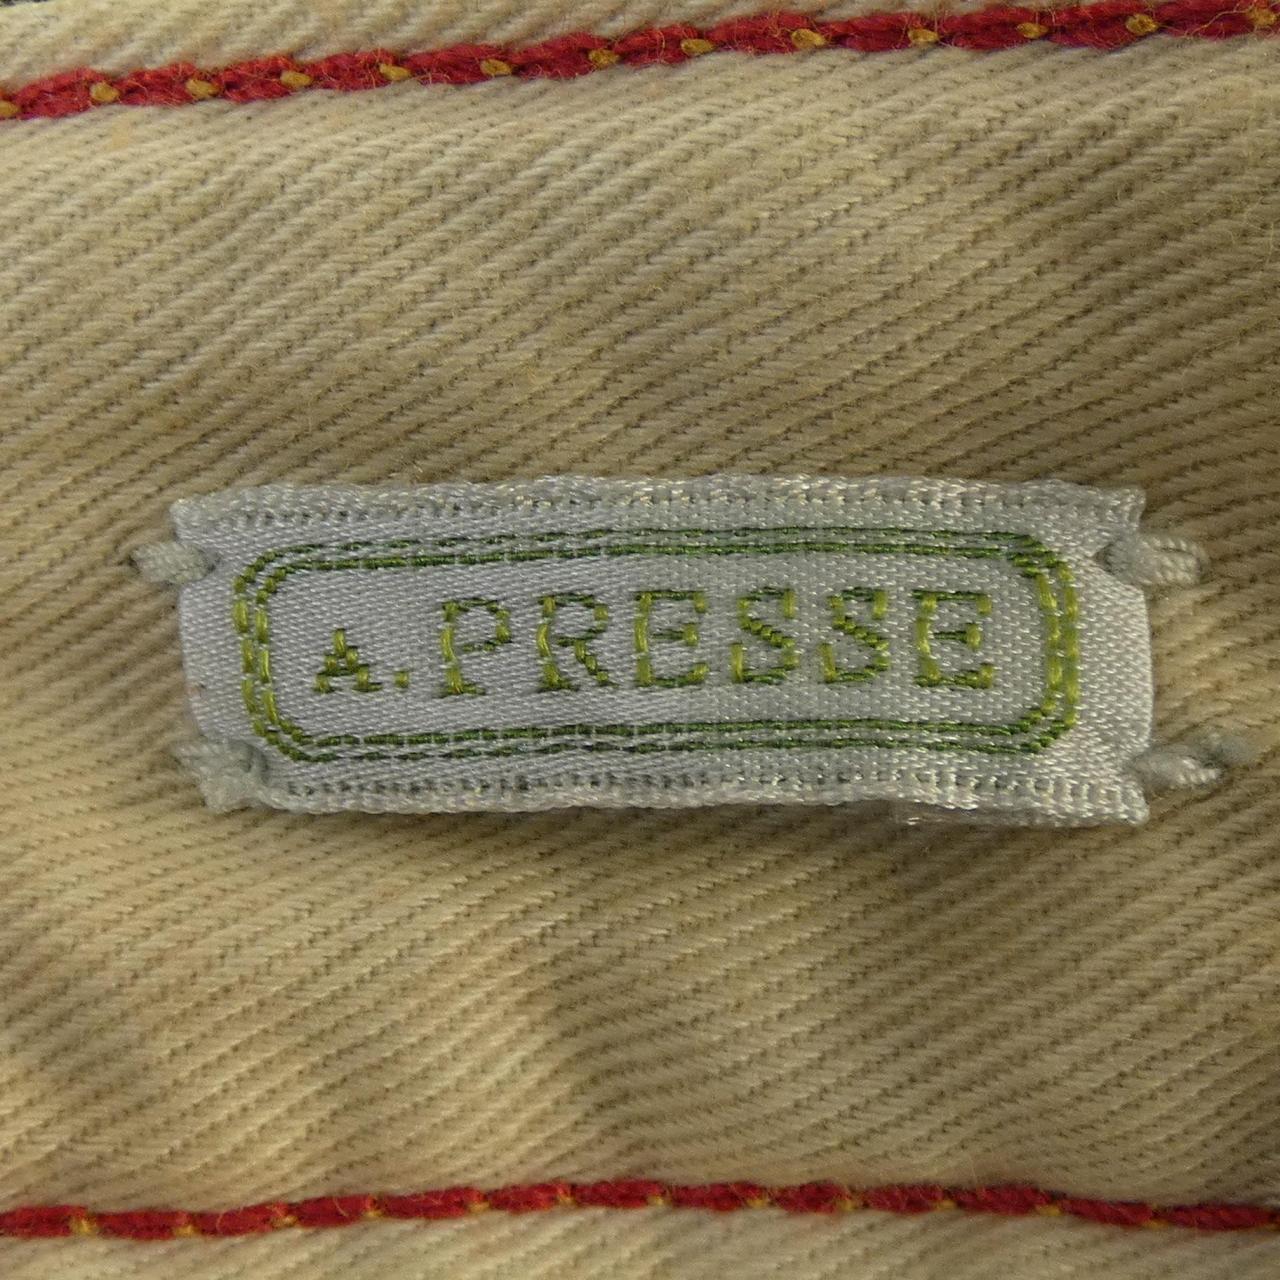 A.PRESSE jeans